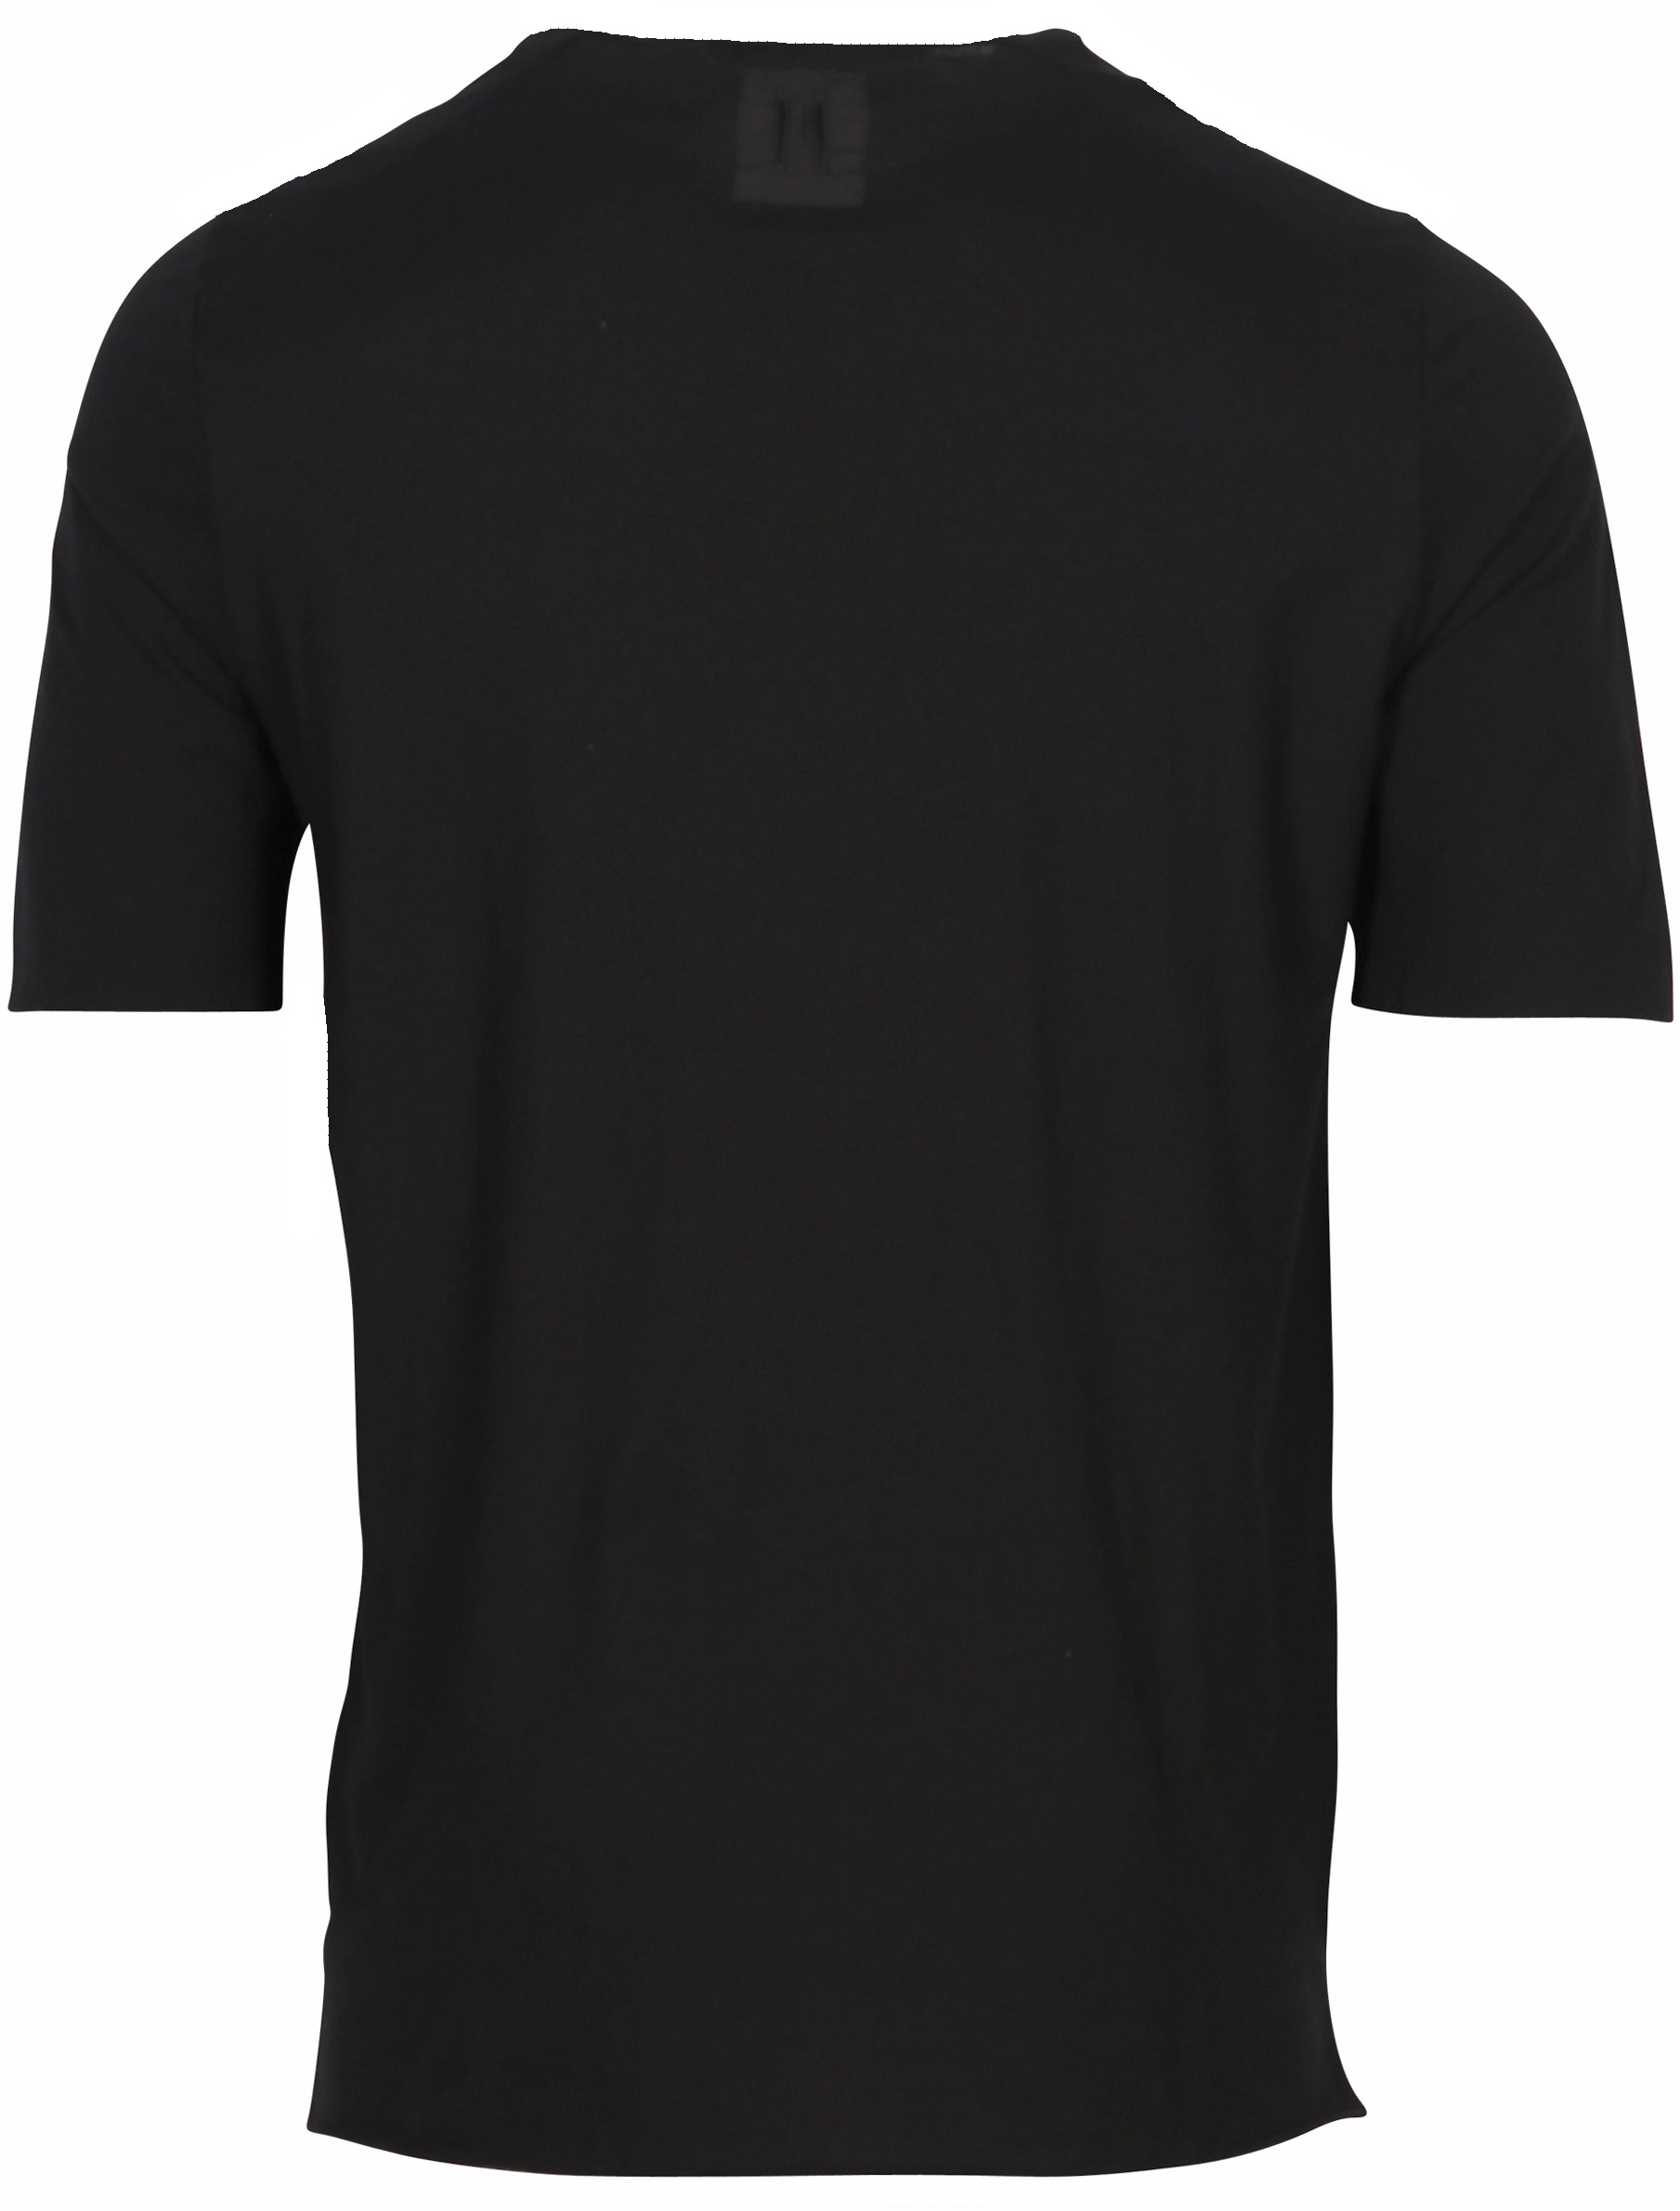 Hannes Roether T-Shirt Black XXXL